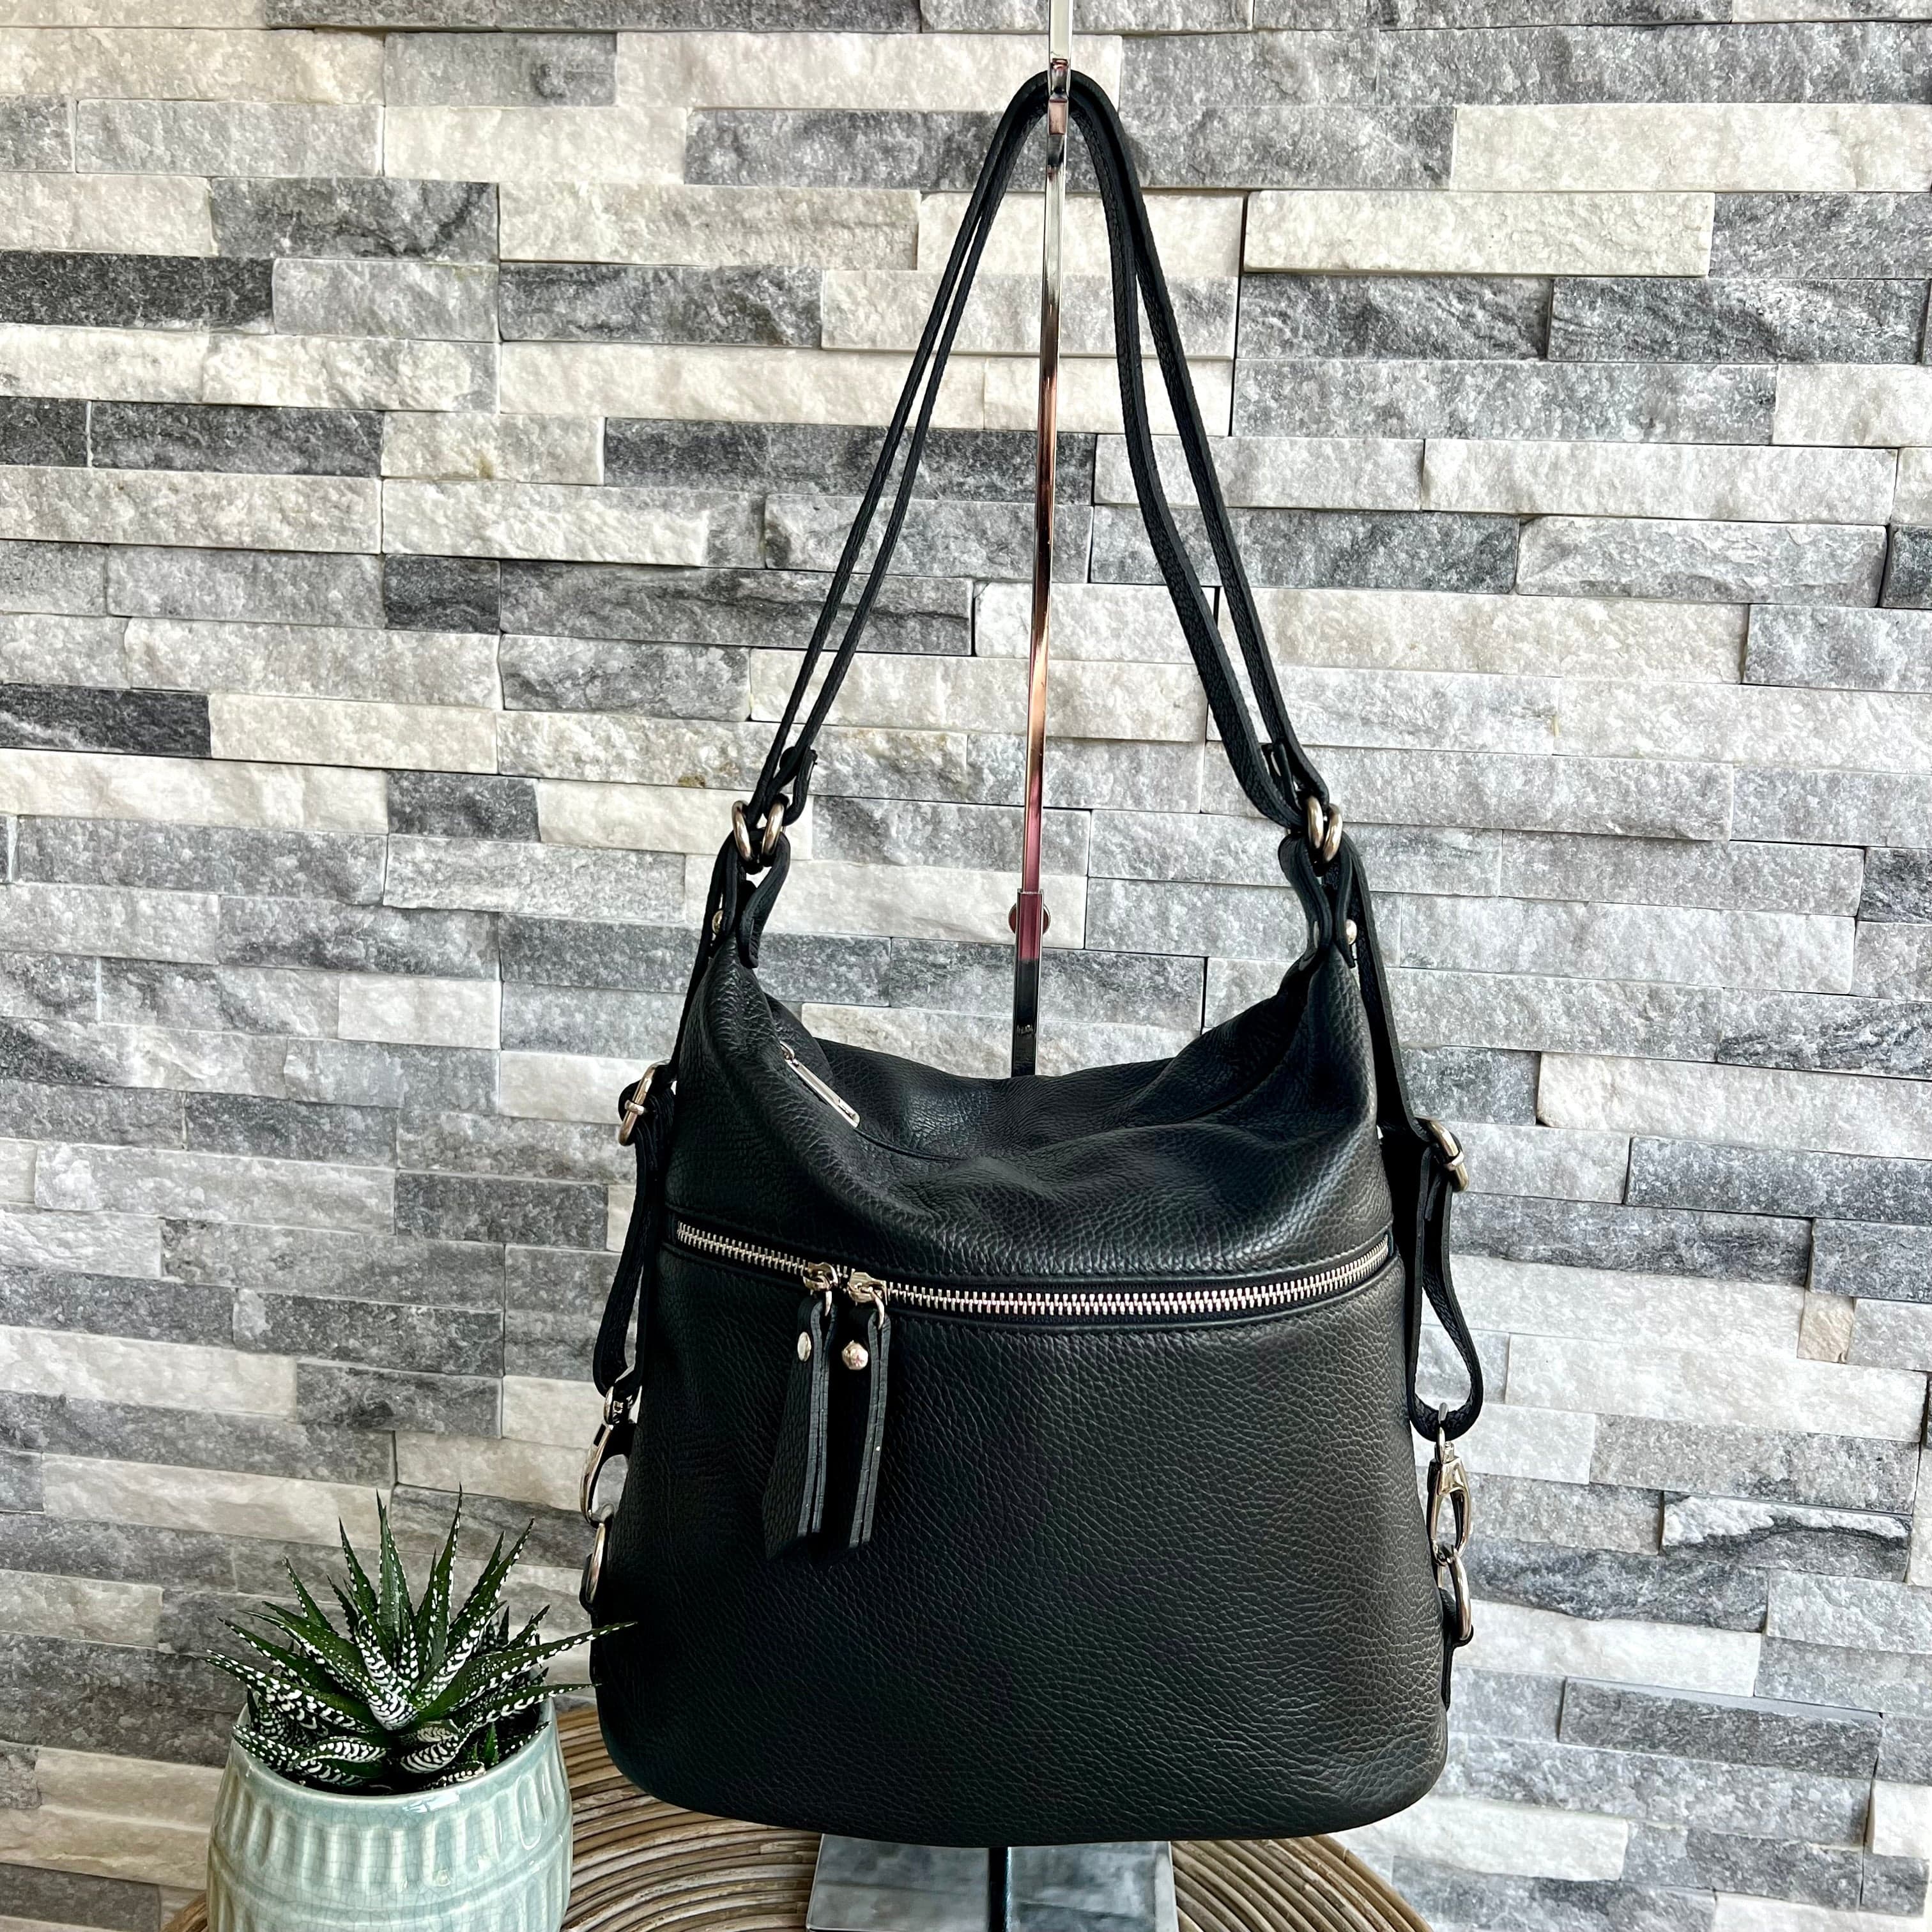 lusciousscarves Handbags Black Italian Leather Convertible Rucksack Backpack Bag